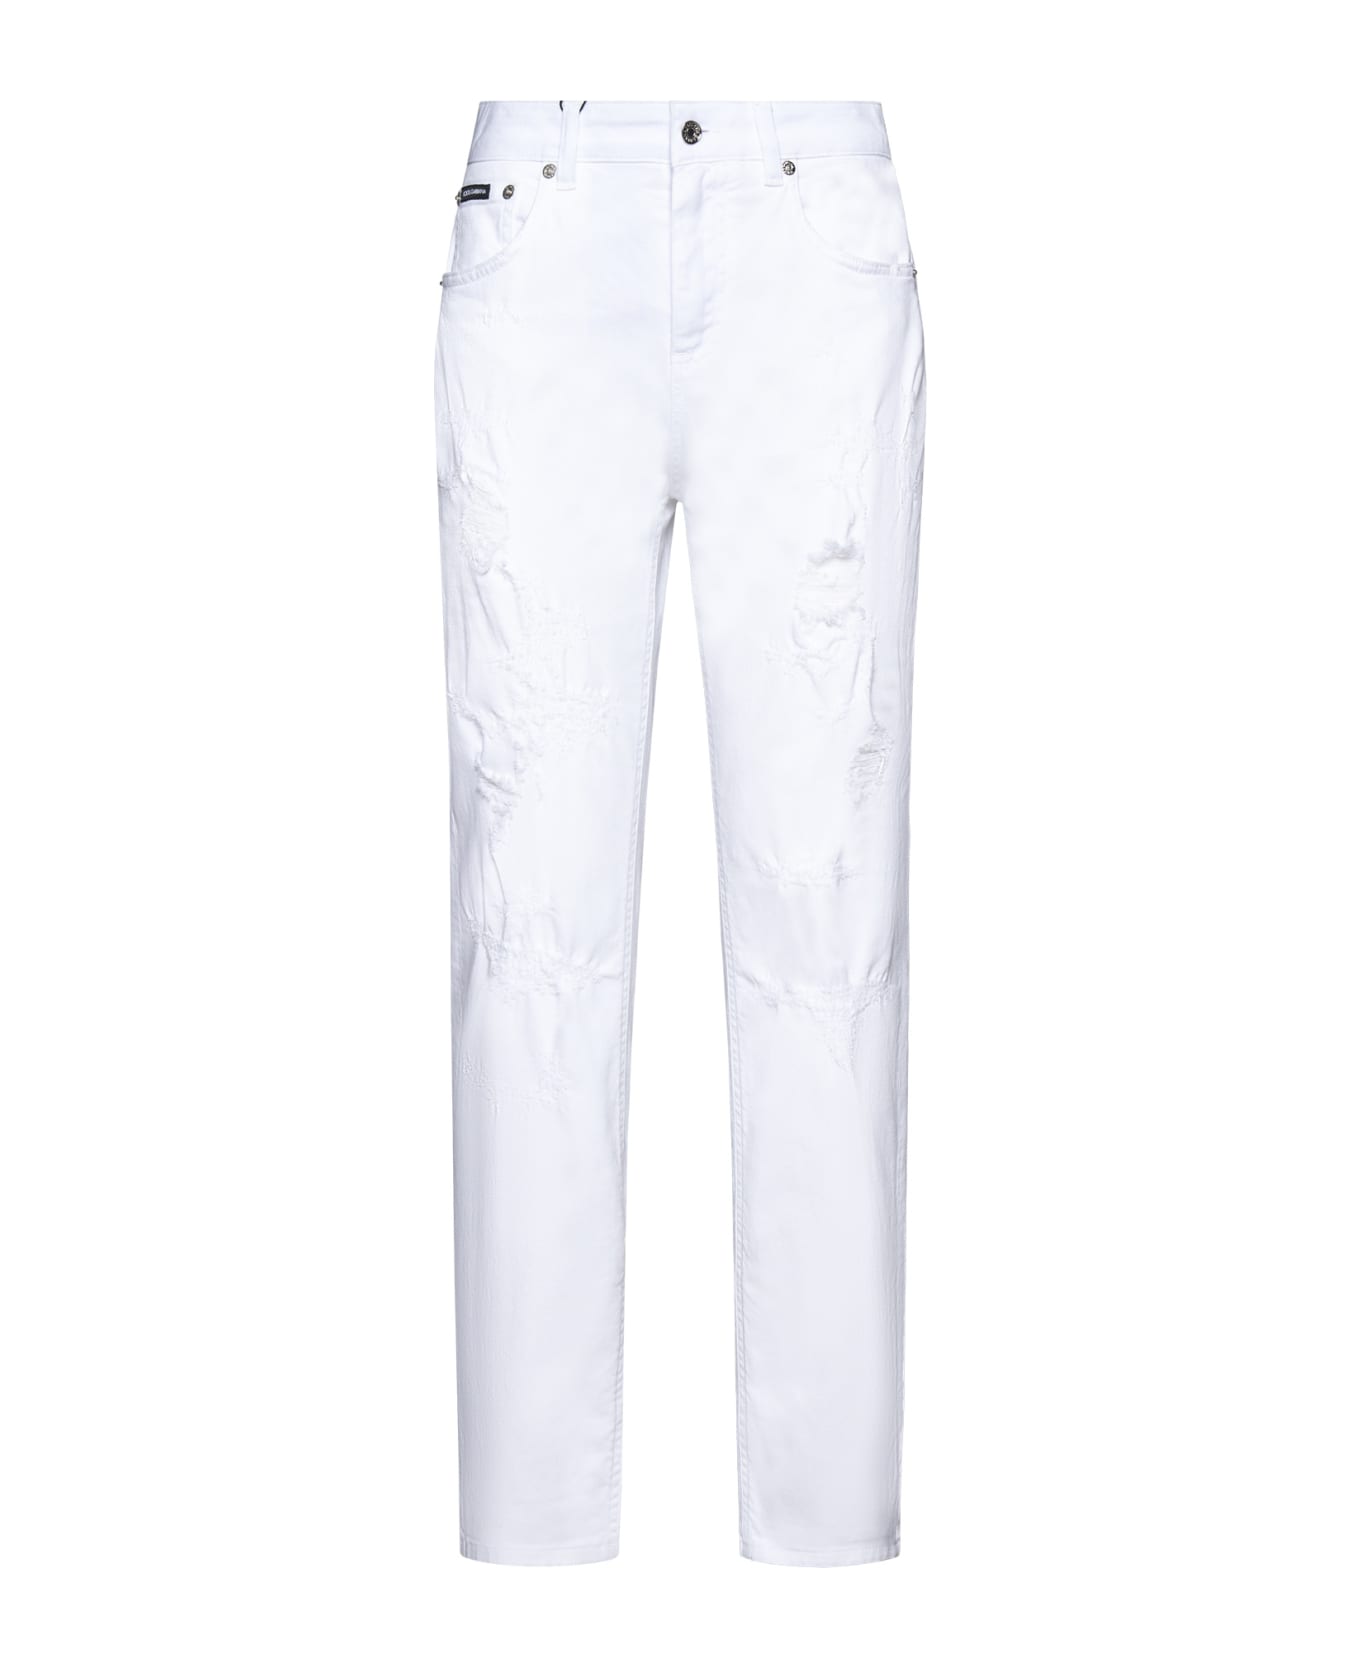 Dolce & Gabbana Jeans - Bianco otticco ボトムス